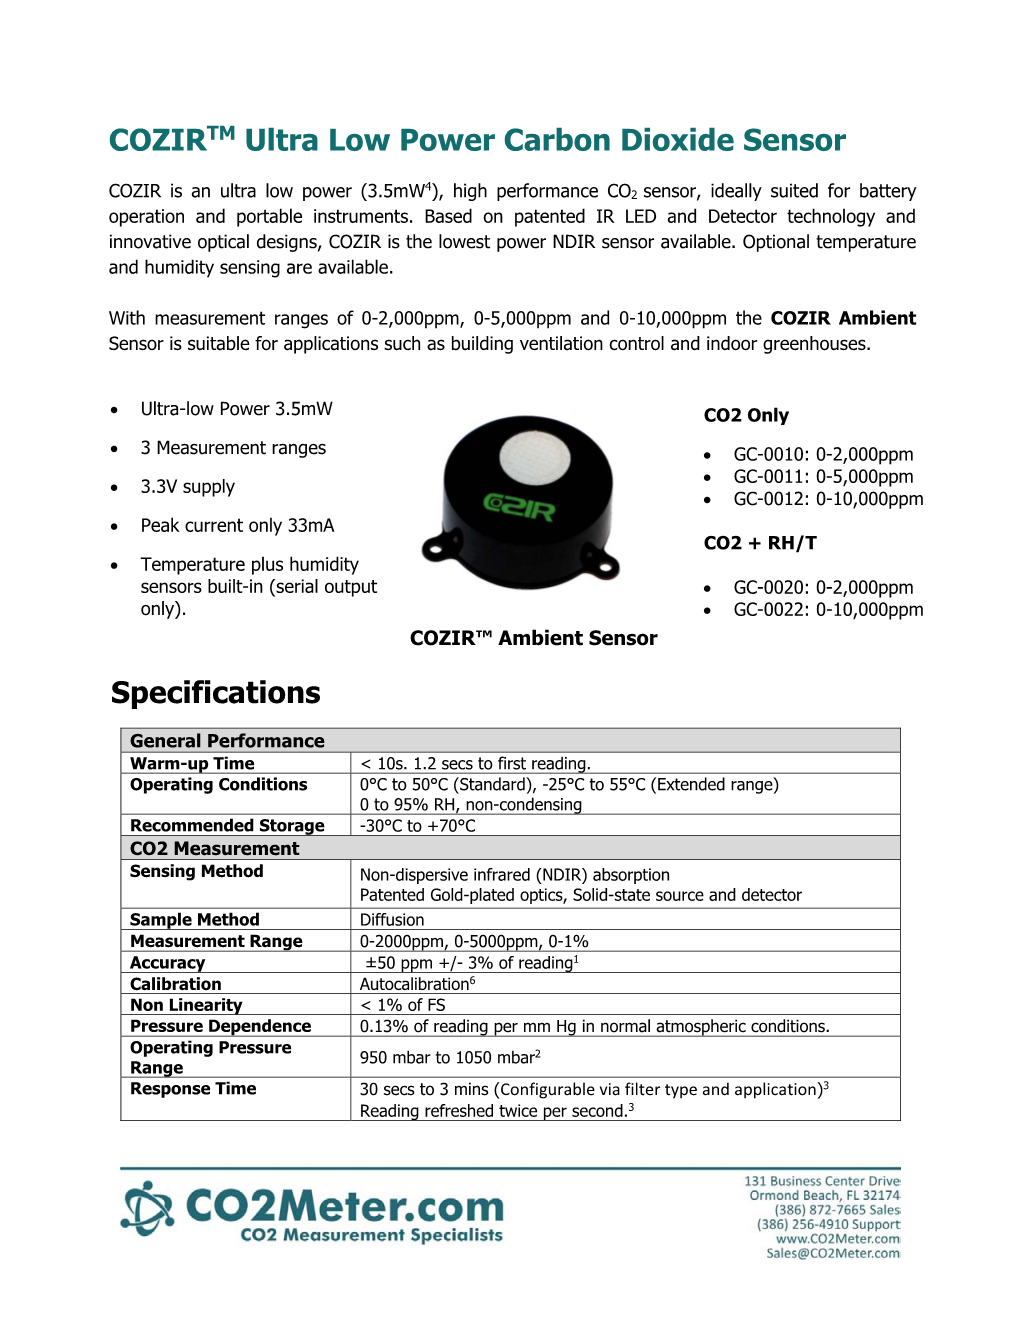 COZIRTM Ultra Low Power Carbon Dioxide Sensor Specifications